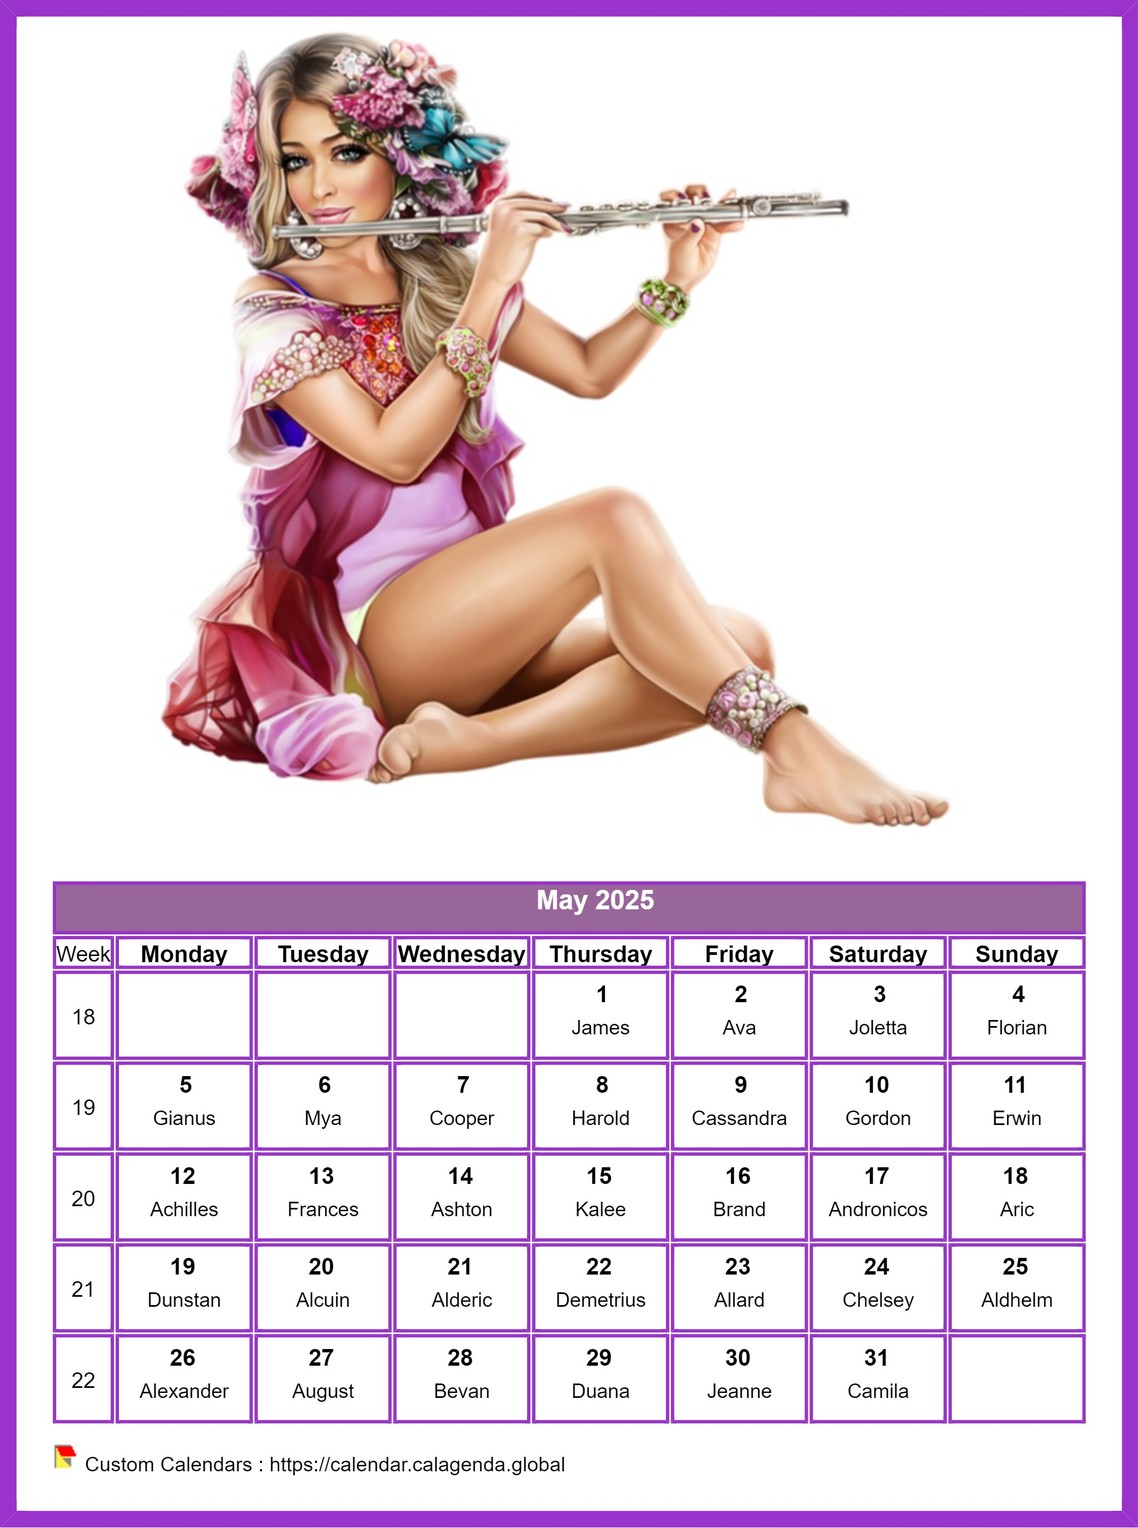 Calendar May 2025 women